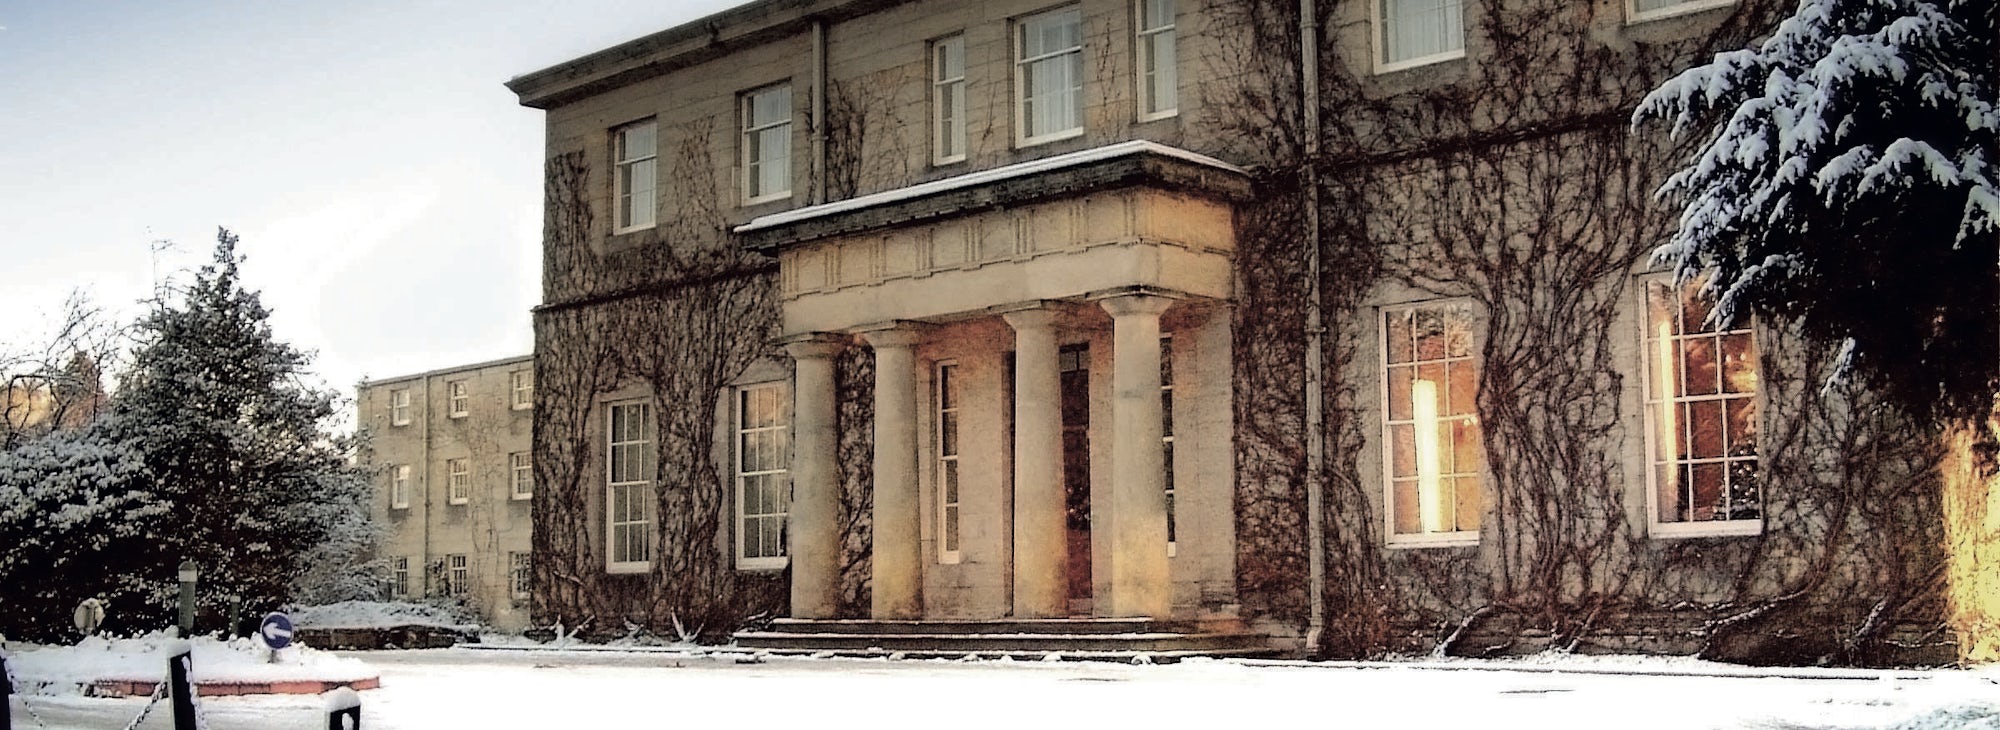 Linden Hall in Winter